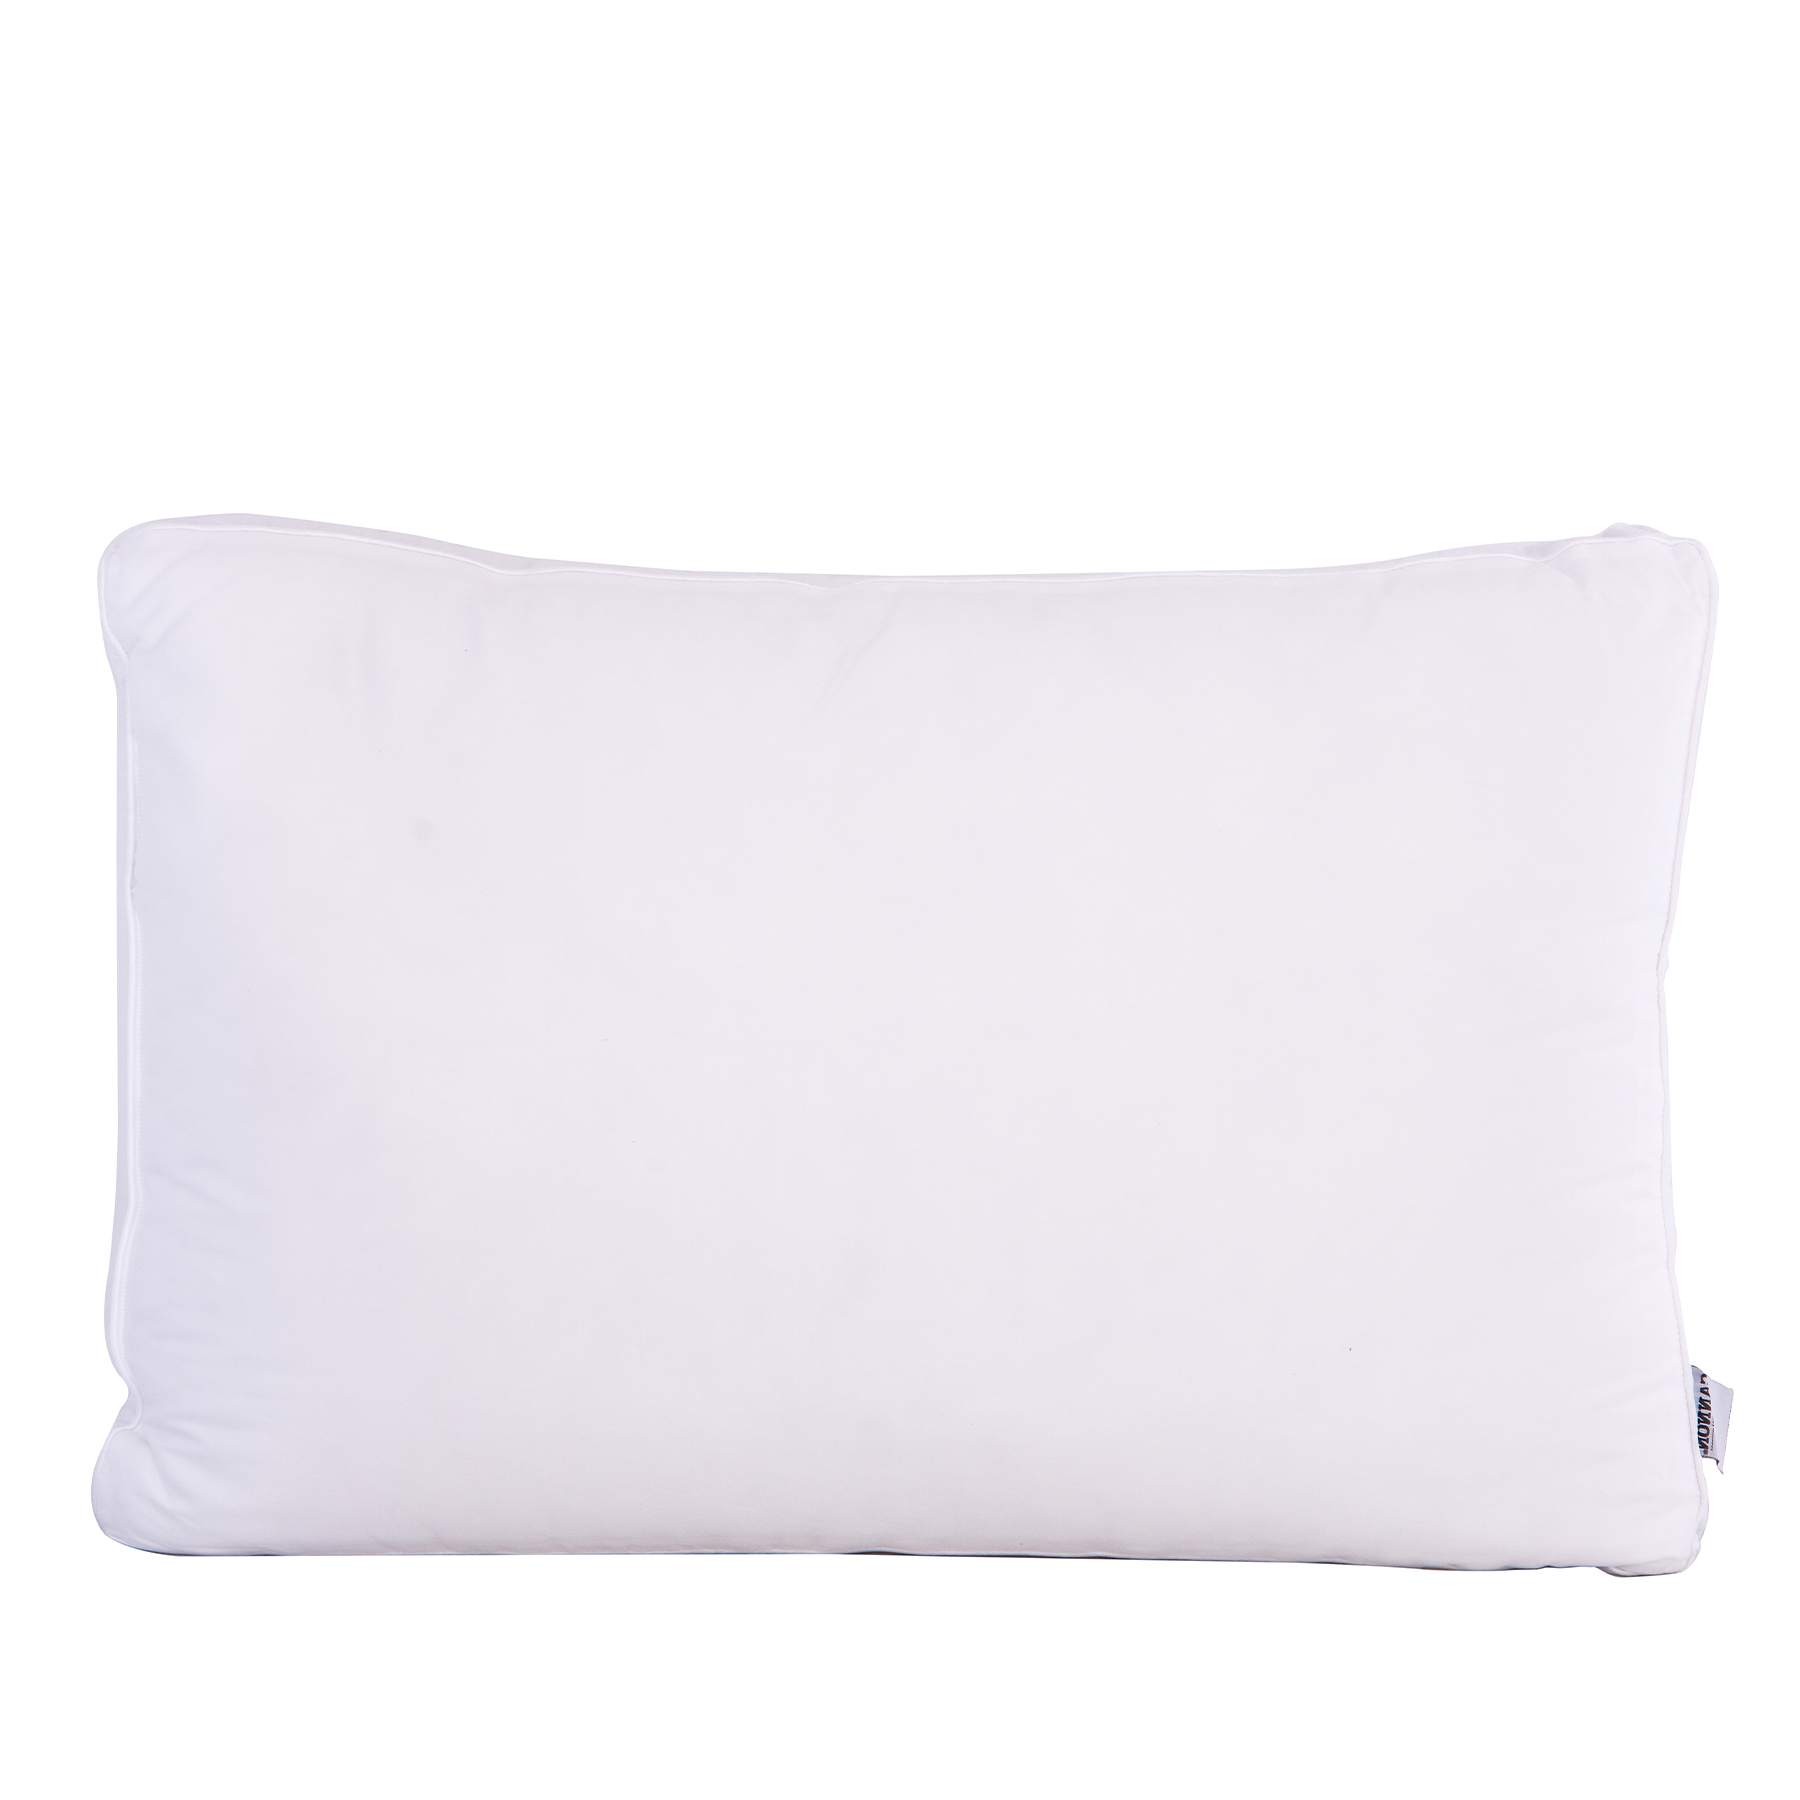 Supima Cotton Luxury Pillow , White ColorSize: 48x73+5cm